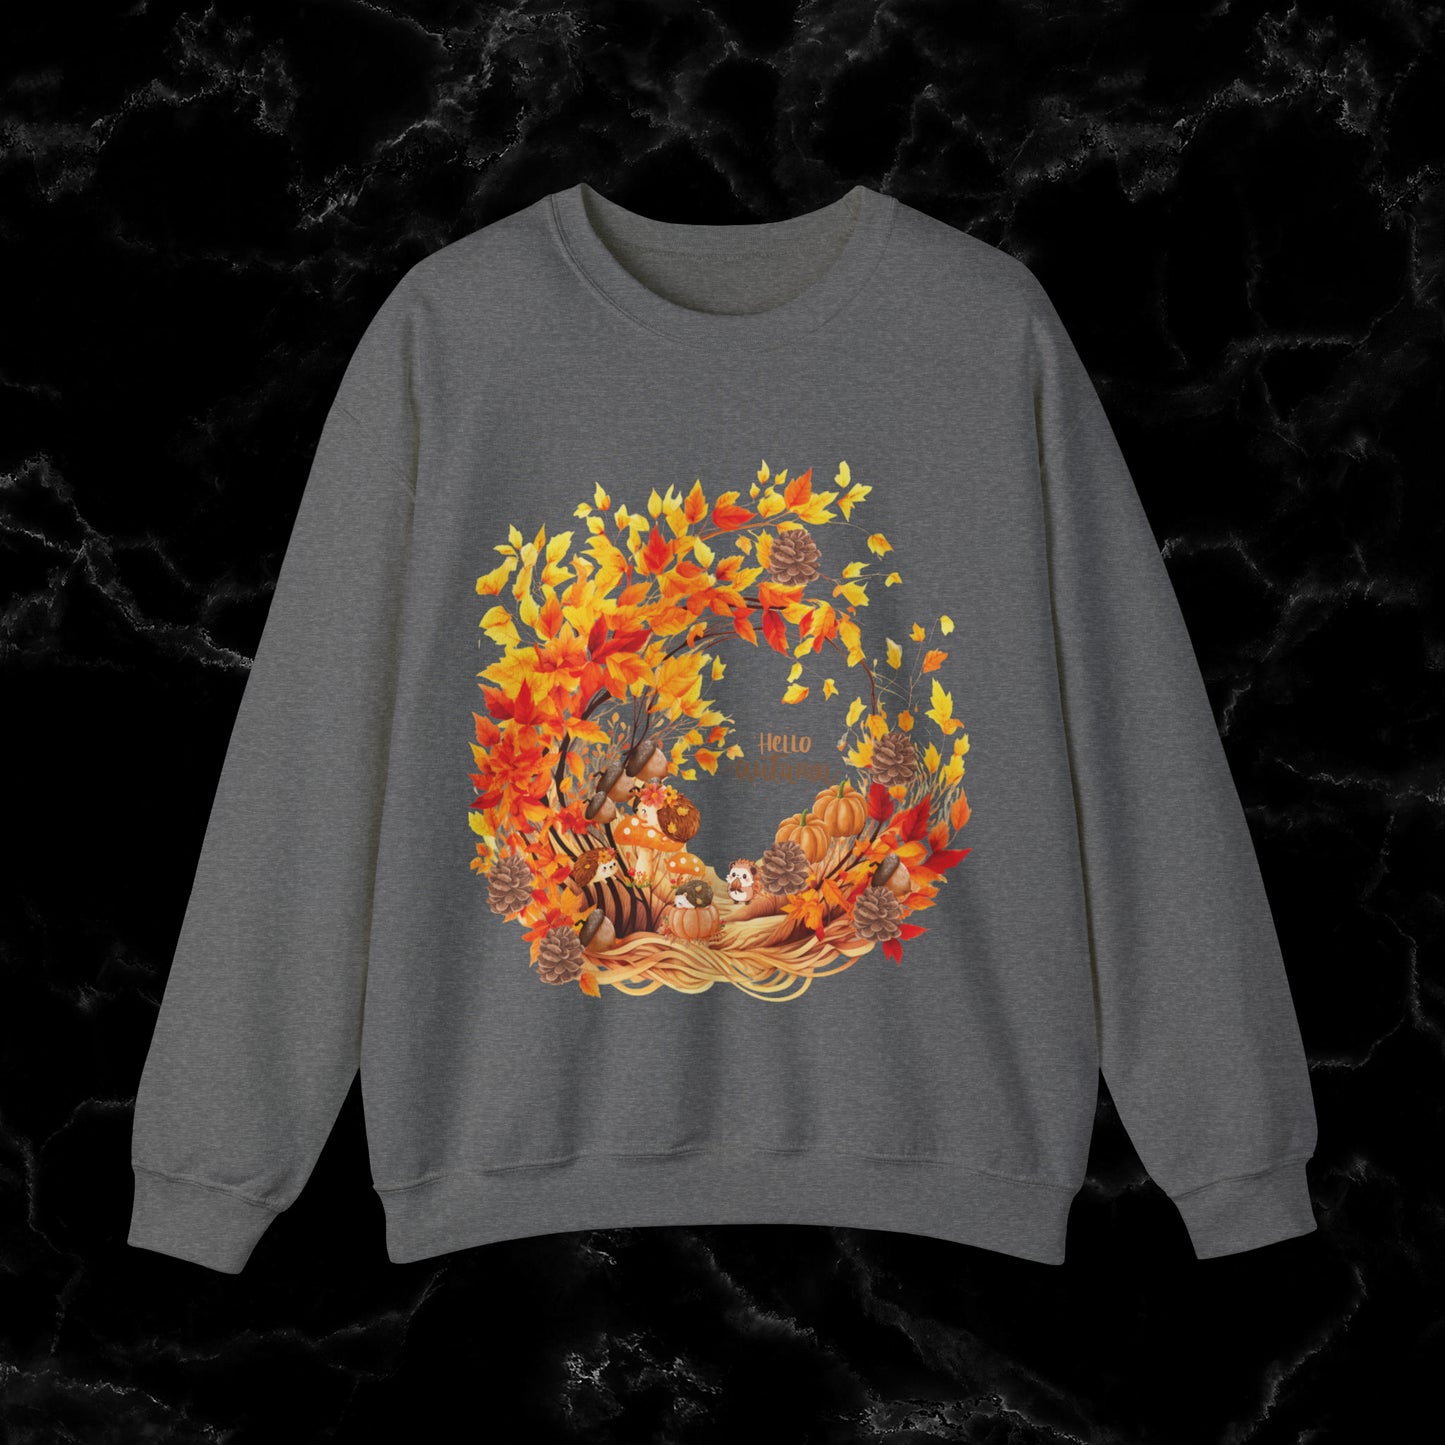 Hello Autumn Sweatshirt | Fall Design - Fall Seasonal Sweatshirt - Autumn Design Sweatshirt S Graphite Heather 